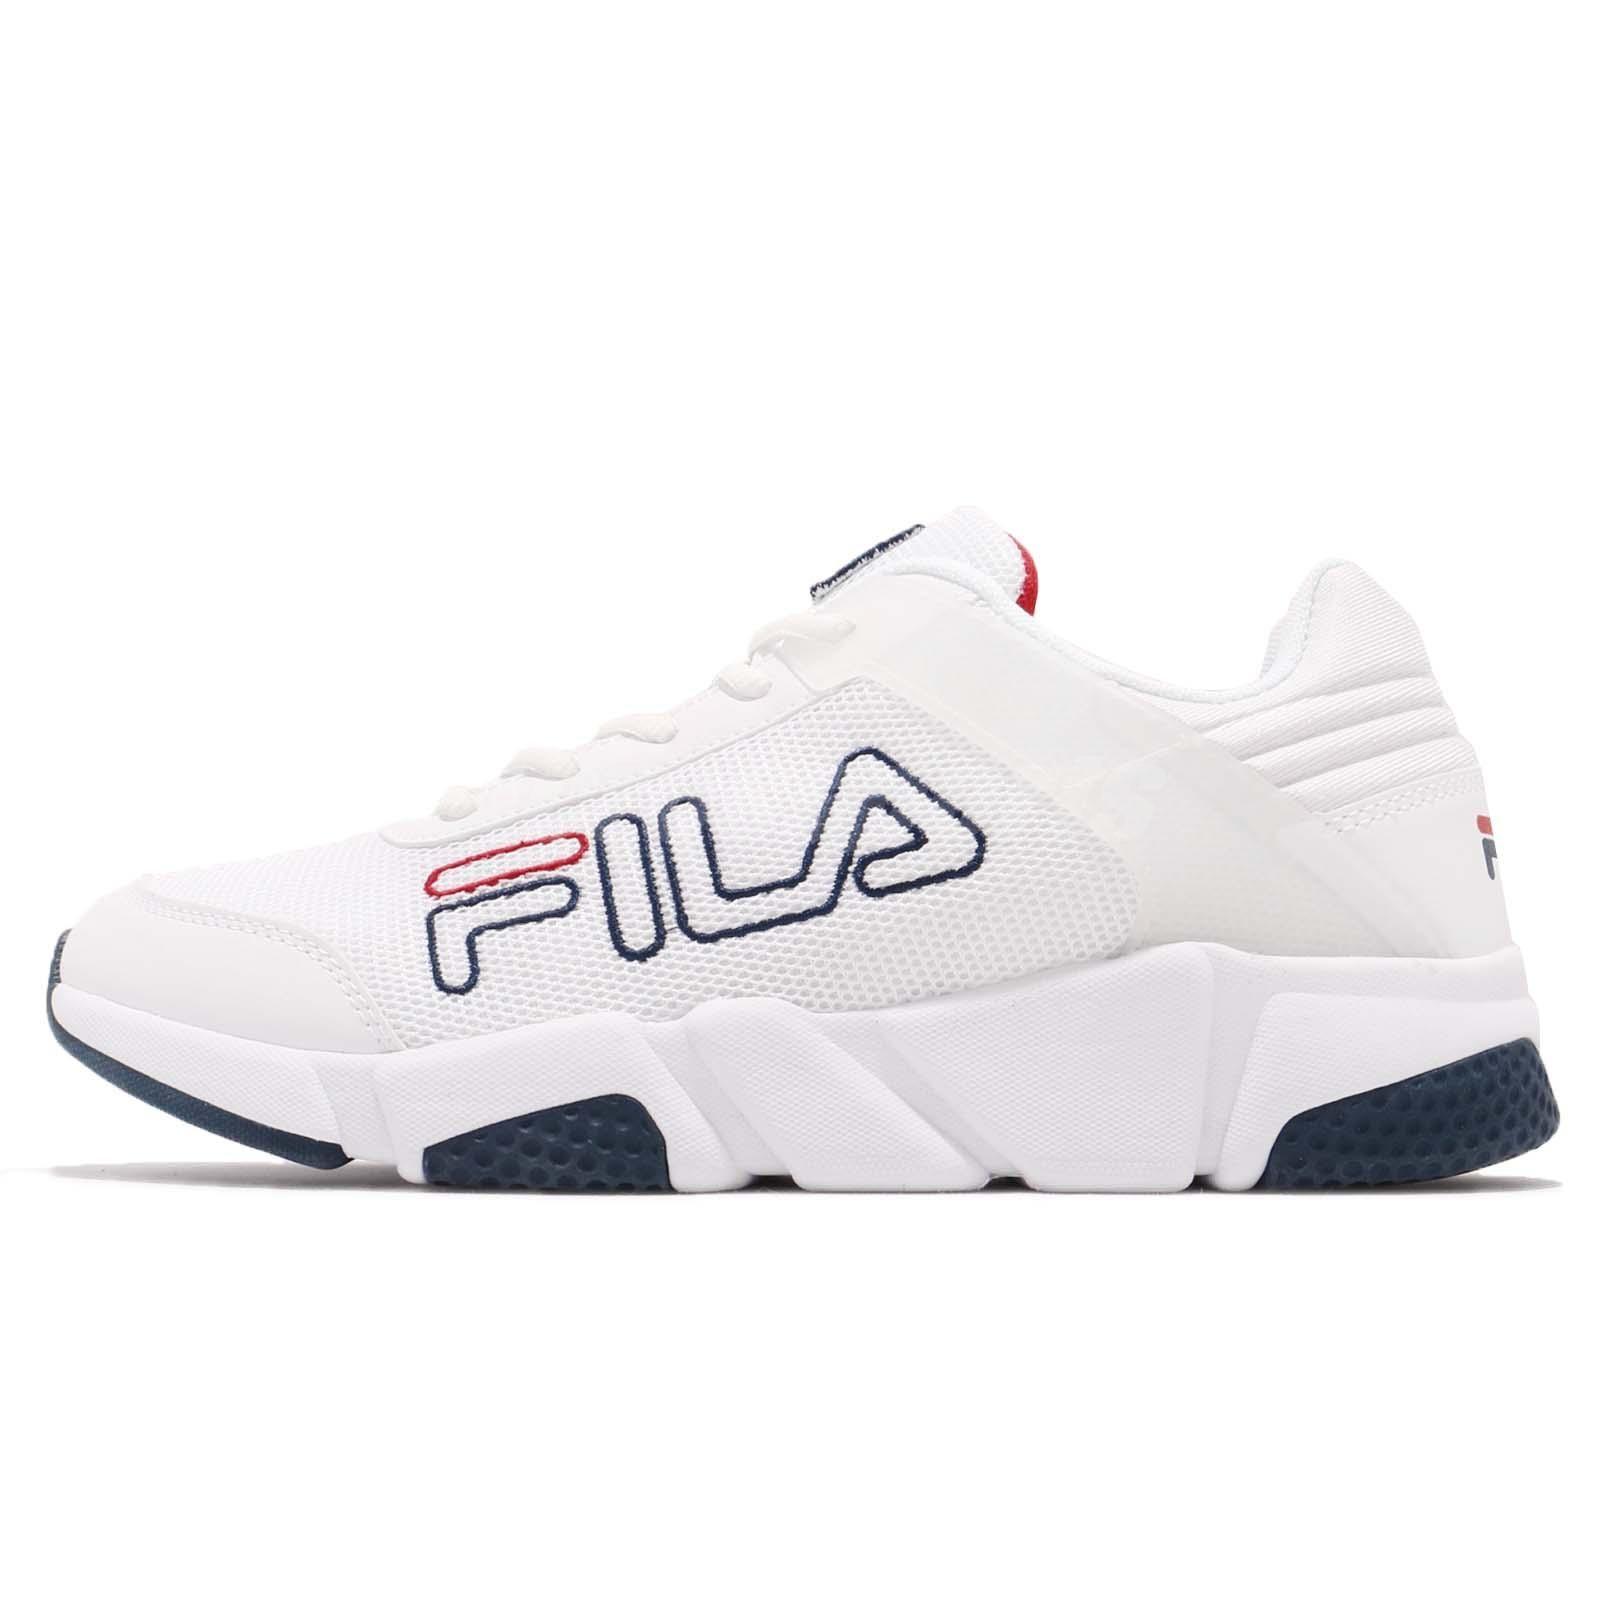 White and Blue Shoe Brand Logo - Fila J526S White Blue Red Big Logo Mens Athletic Running Shoes ...